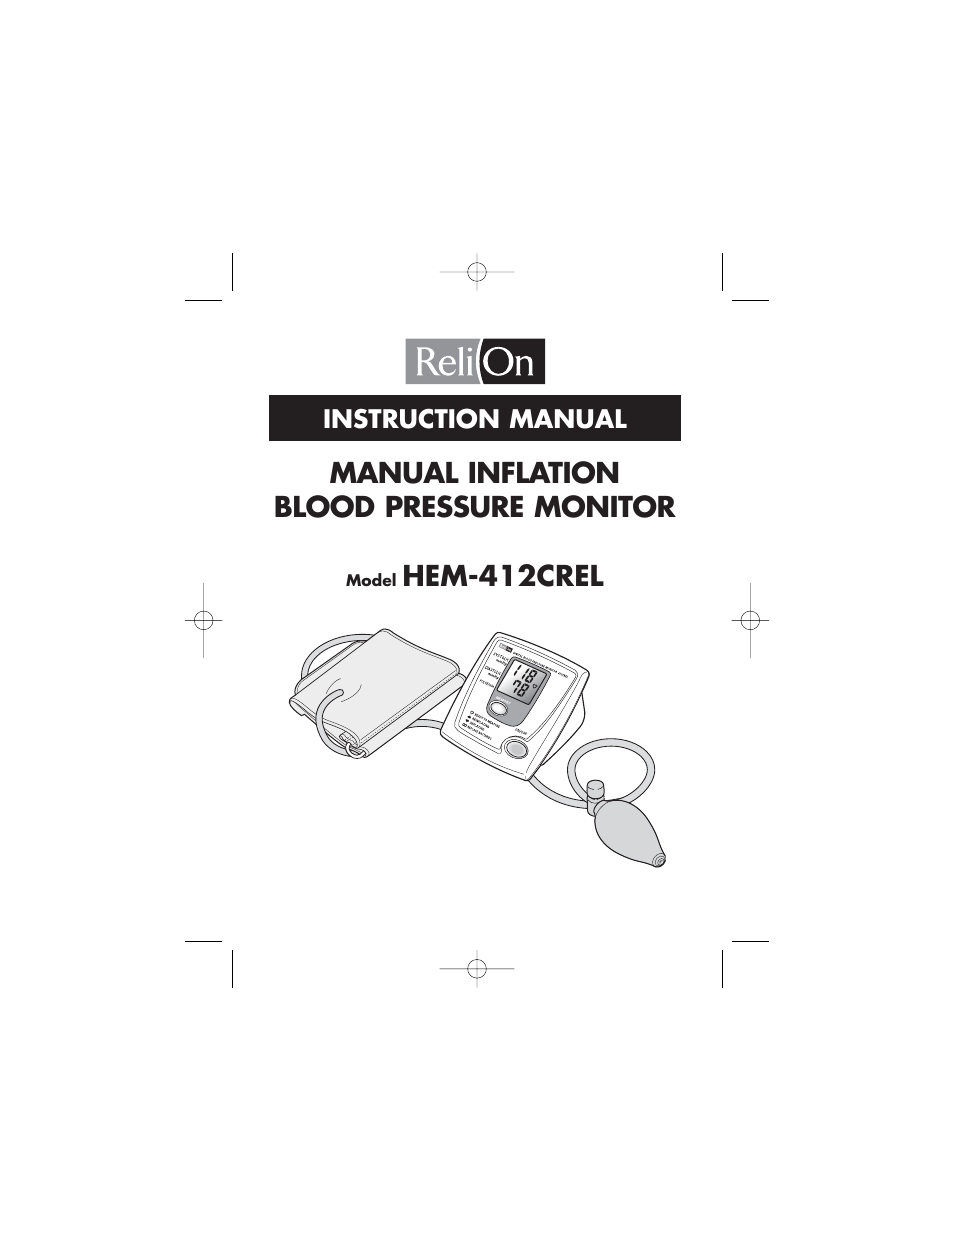 ReliOn HEM-412CREL User Manual | 24 pages